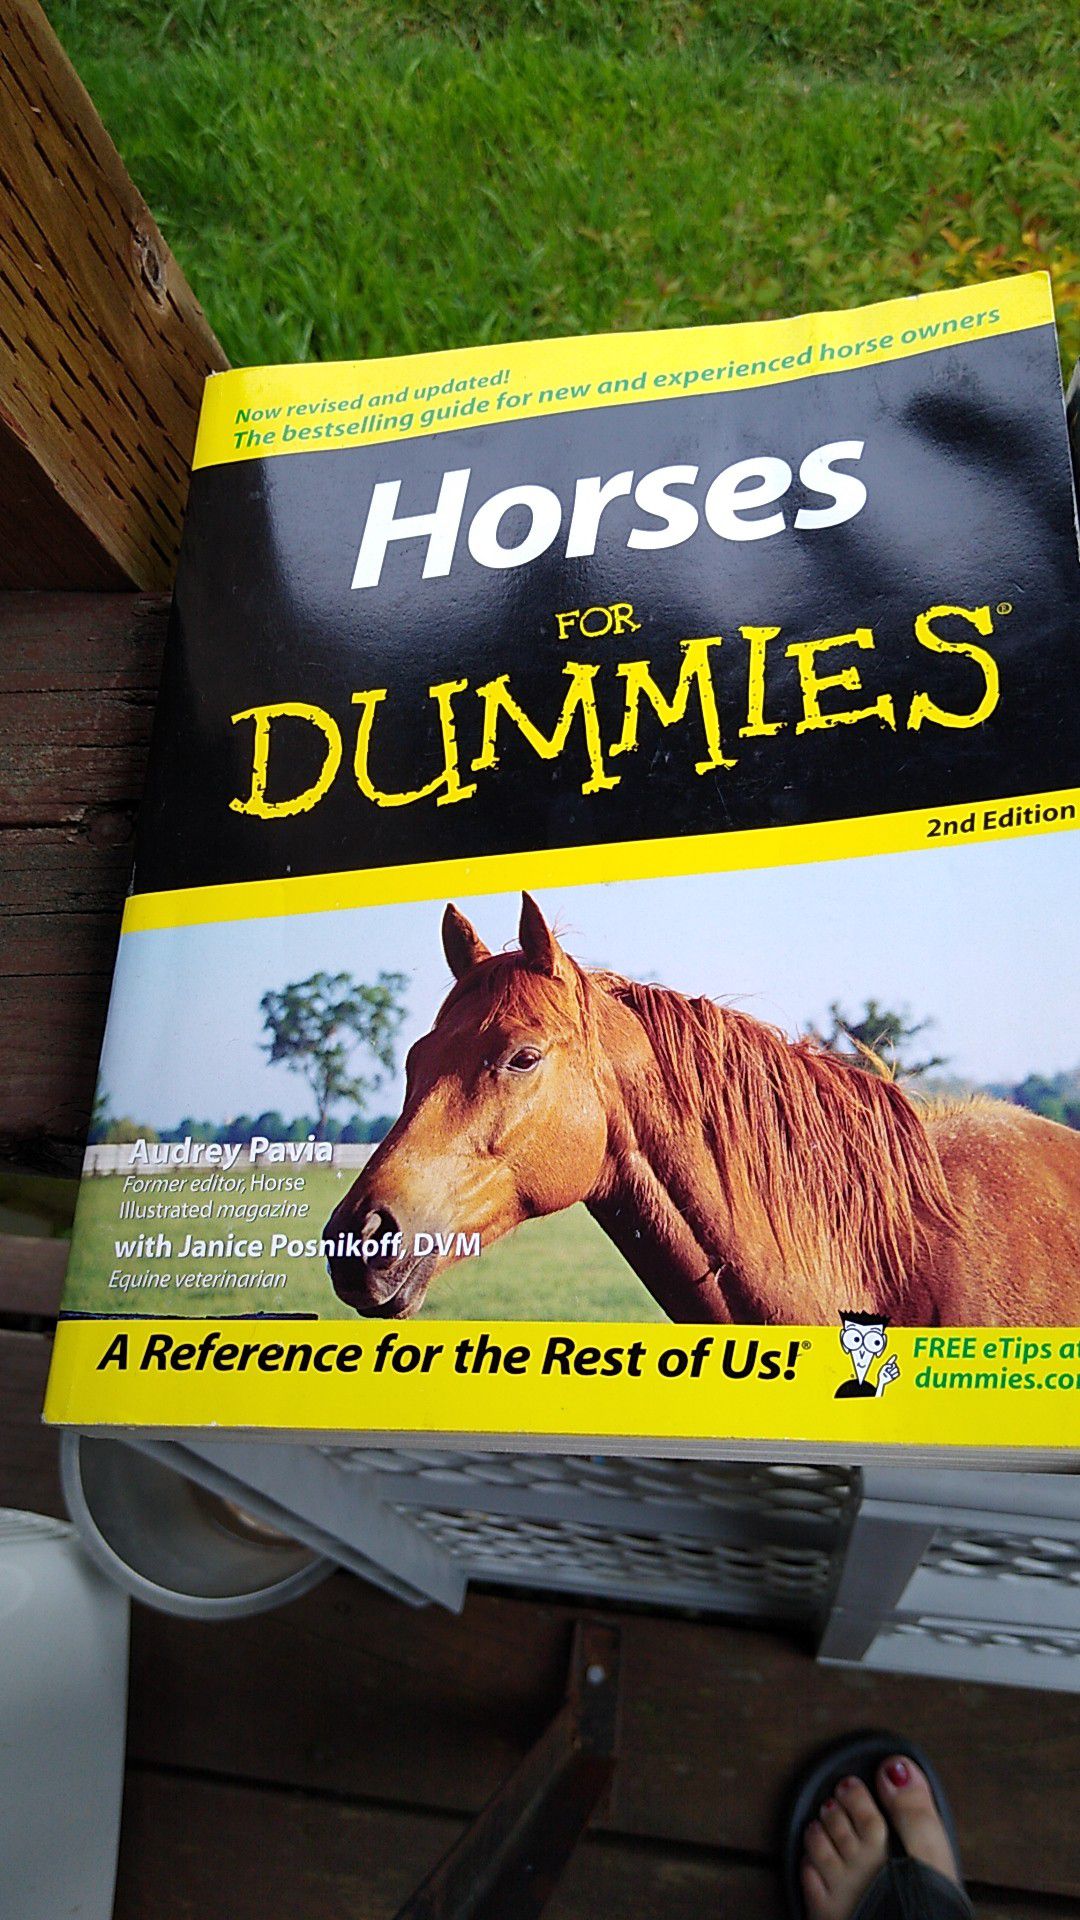 Horse books